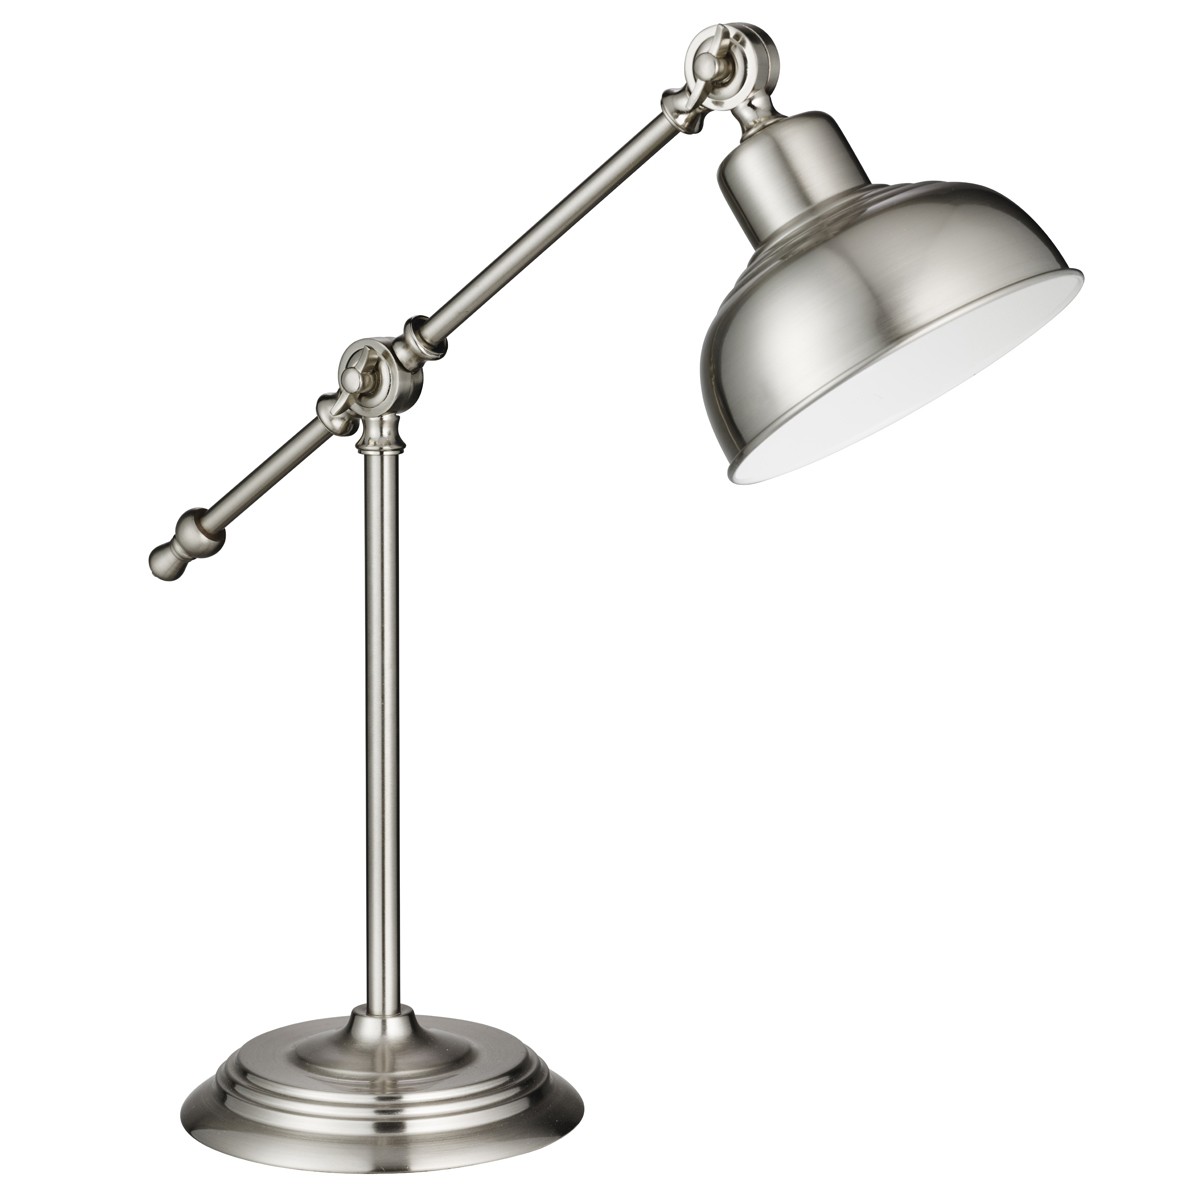 Adjustable table lamp - 10 tips for buying - Warisan Lighting